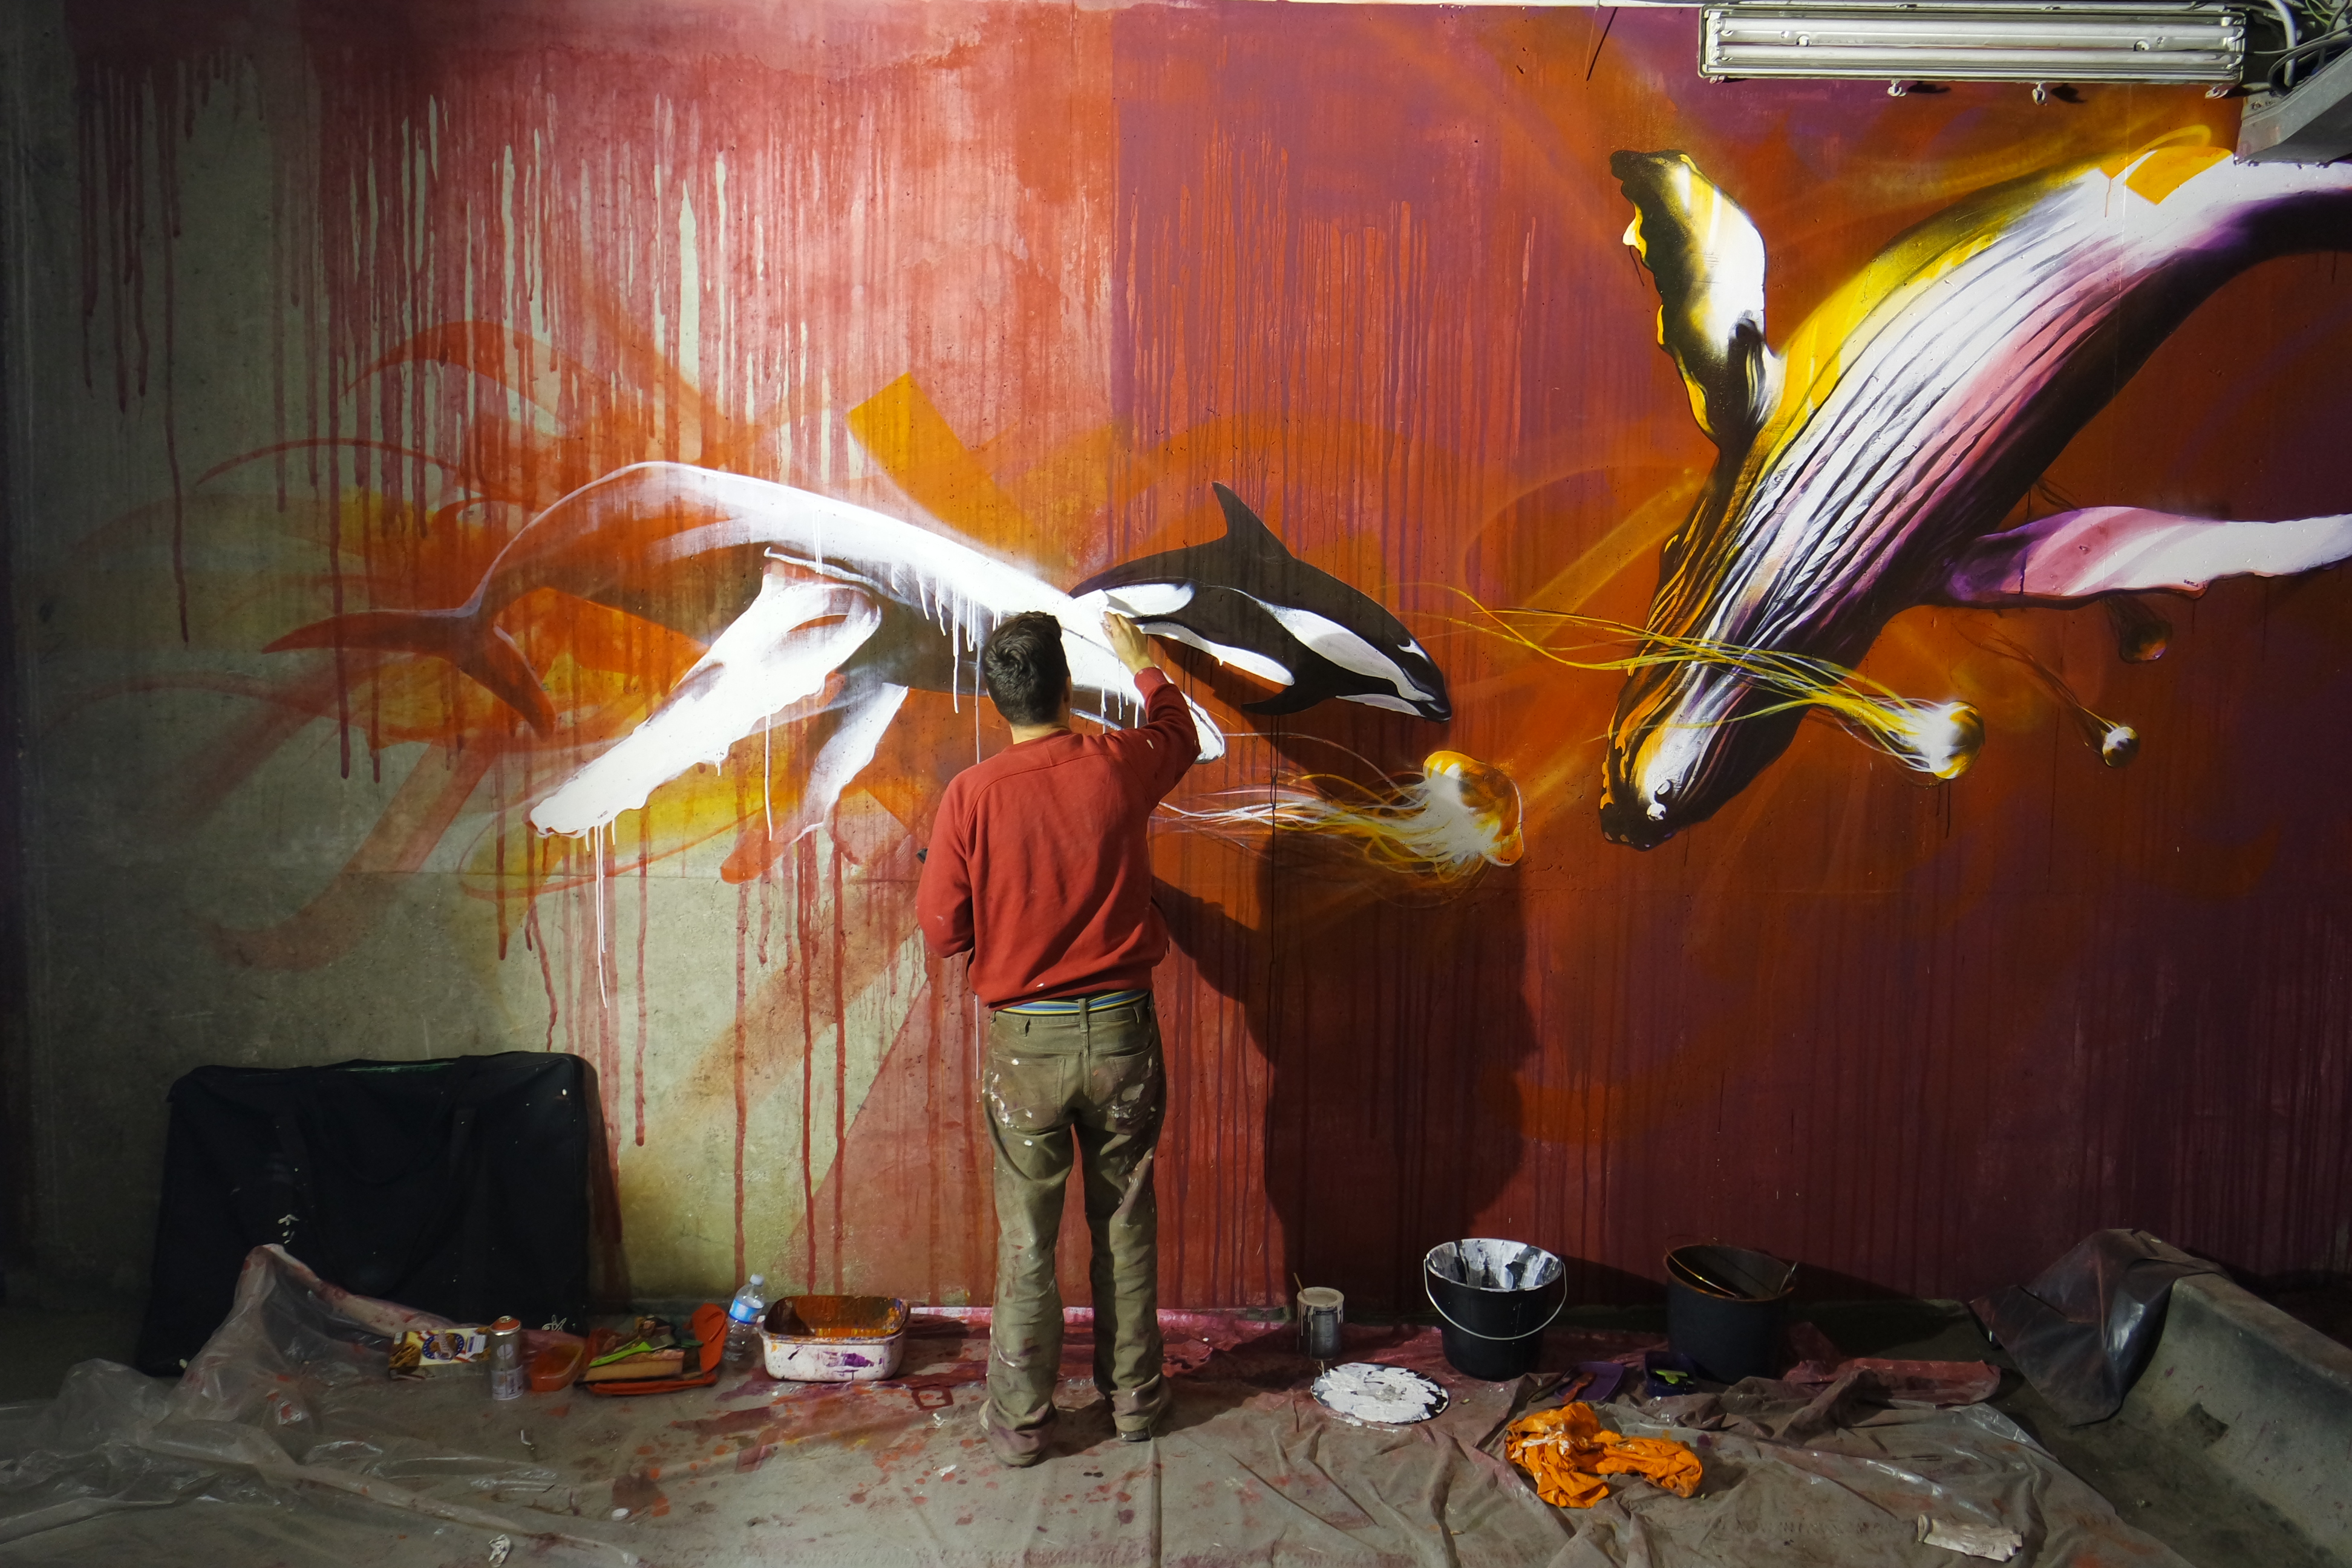 Dan-23-work-in-progress-street-art-graffiti-mur-Nuit-Blanche-2014-Halle-Freyssinet-carte-blanche-Jef-Aérosol-photo-by-United-States-of-Paris-Blog